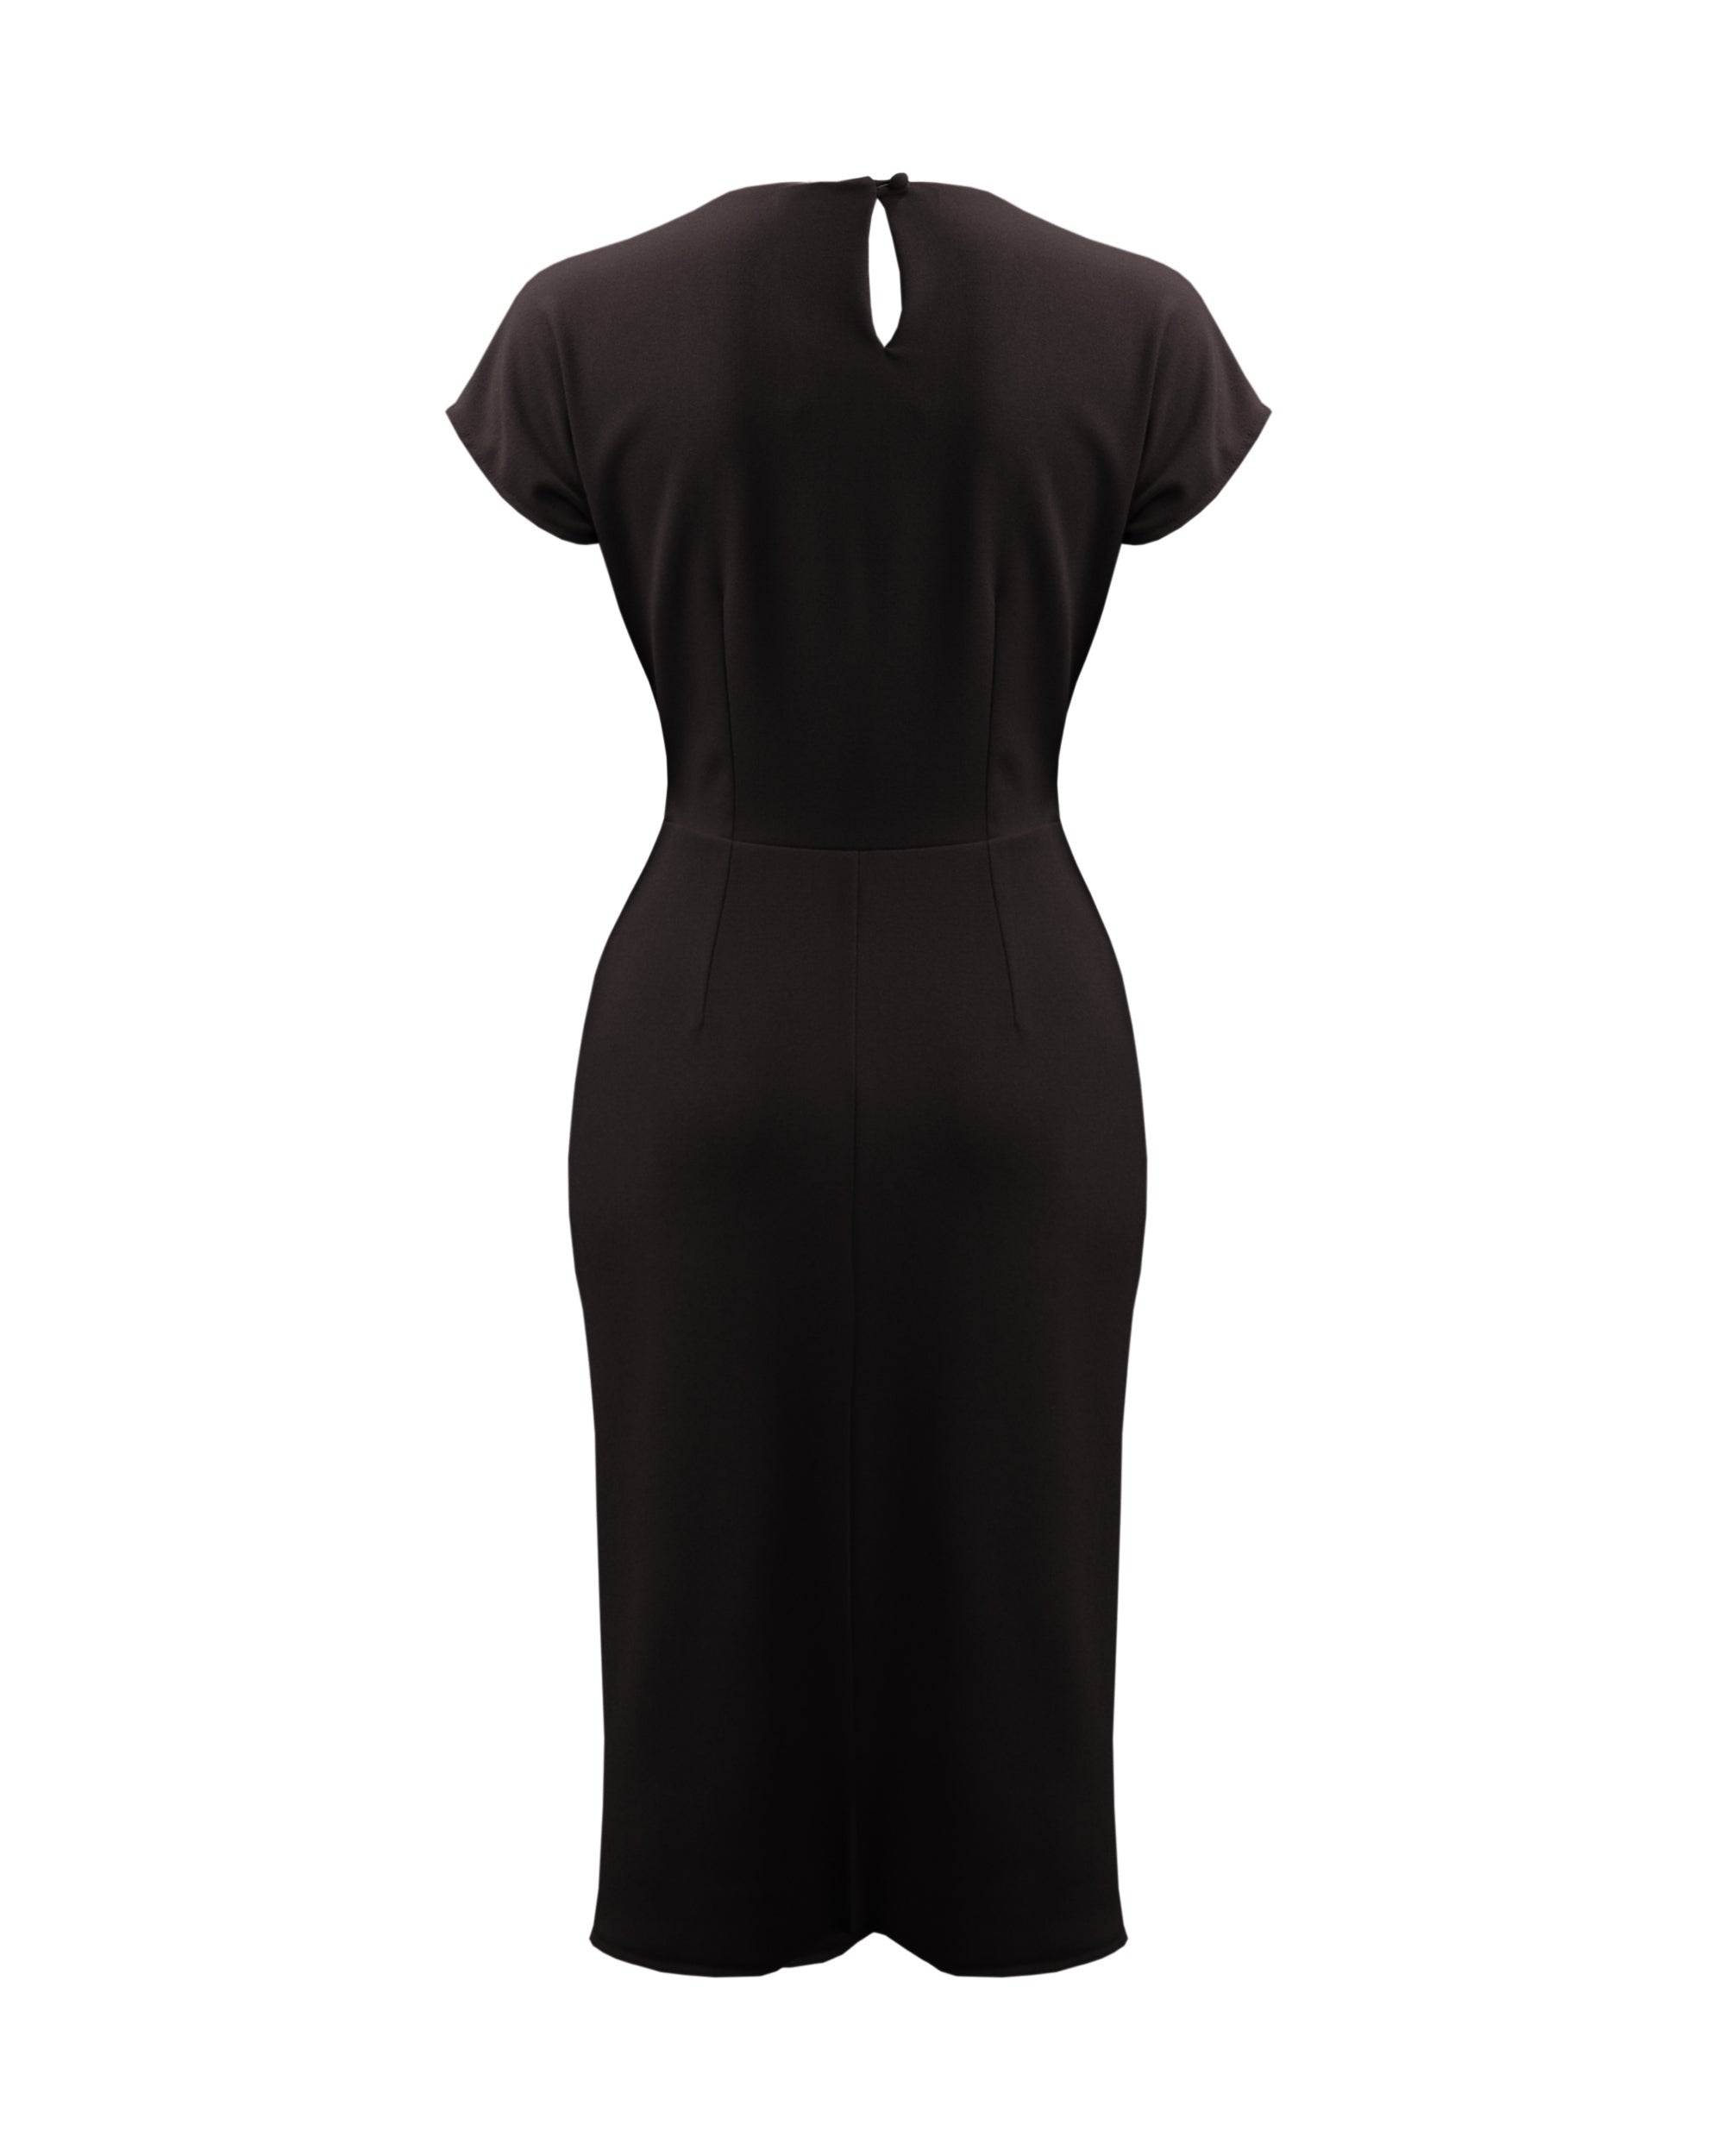 40s Hayworth Dress - Black Crepe